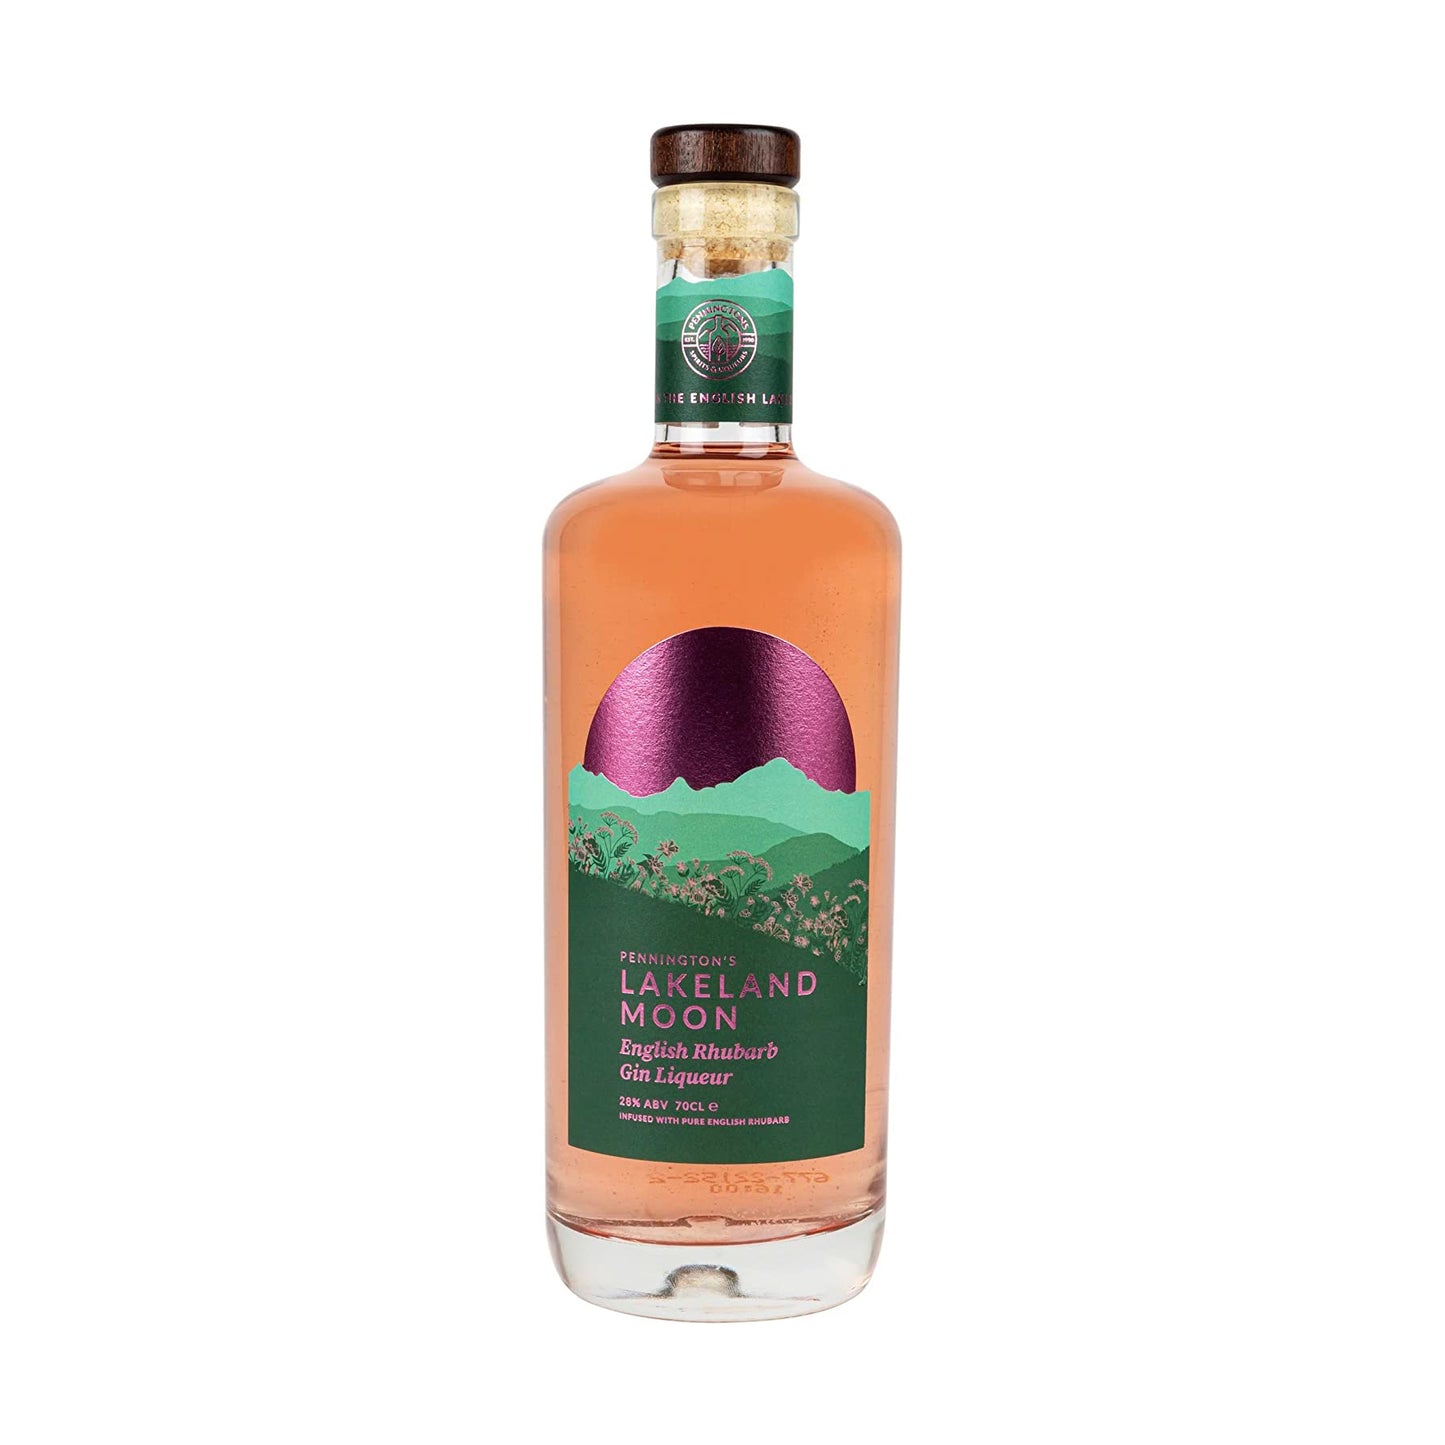 Pennington's Lakeland Moon Rhubarb Gin Liqueur 70cl